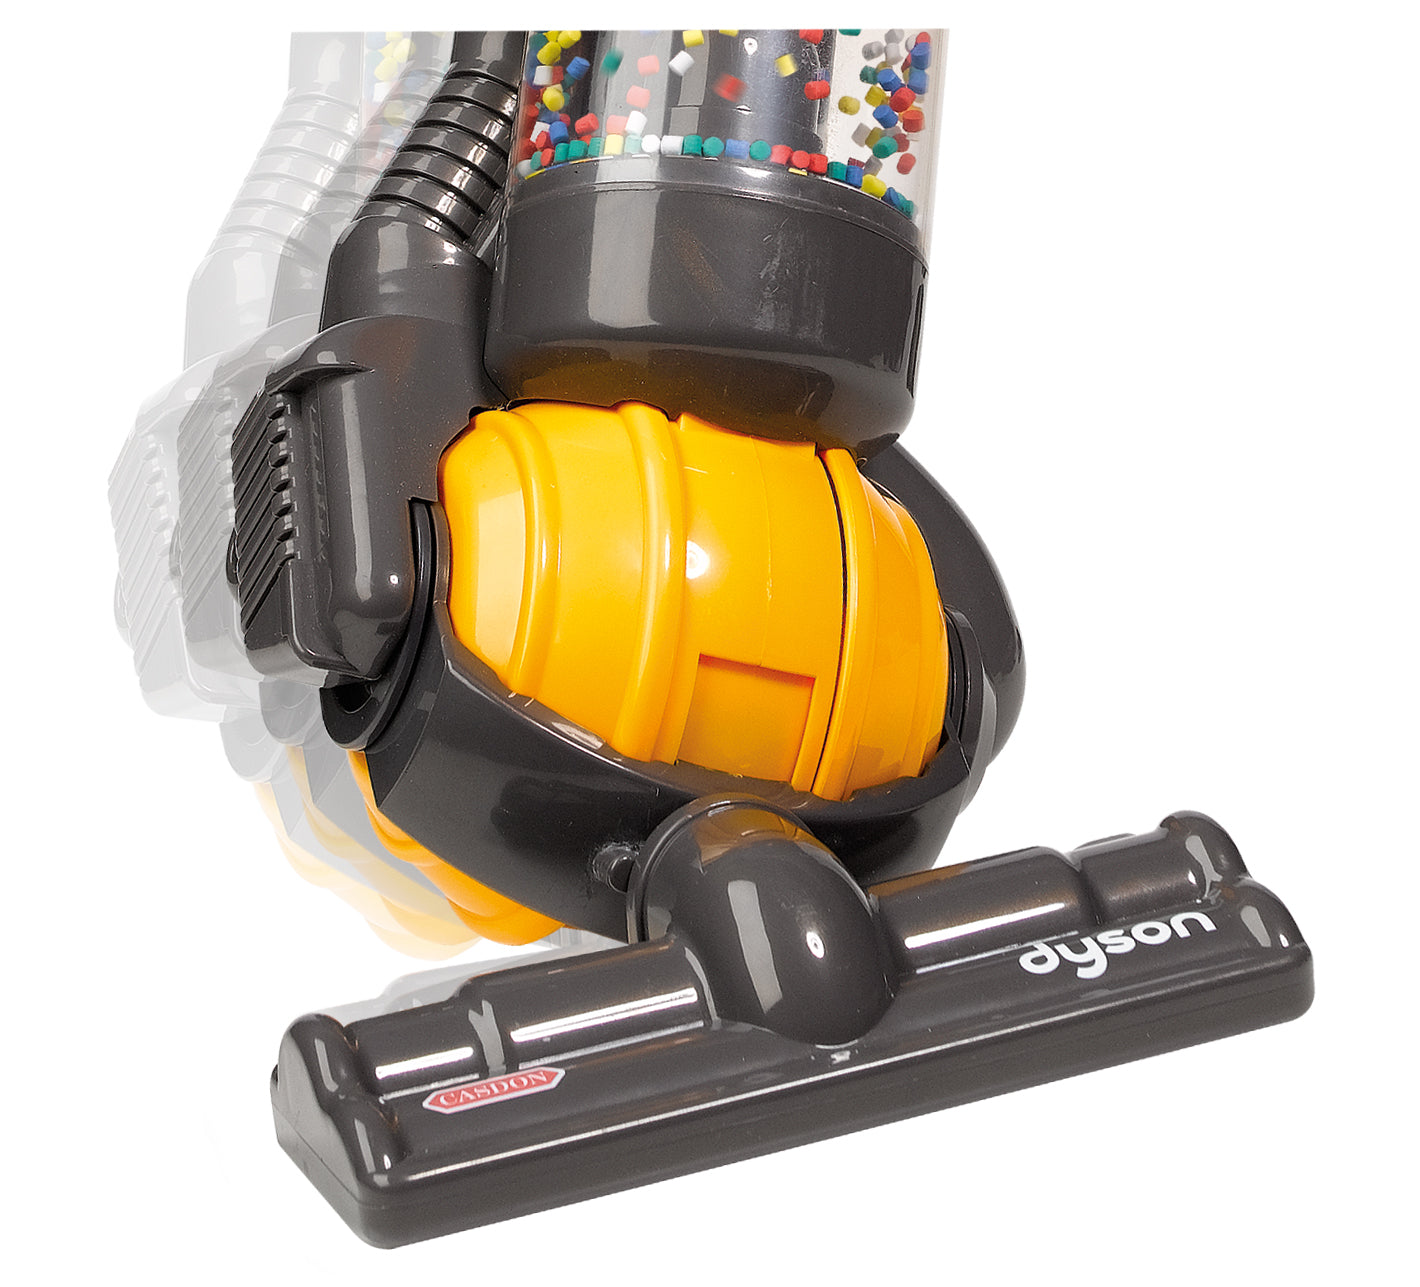 Casdon - Dyson Ball Vacuum Cleaner Toy